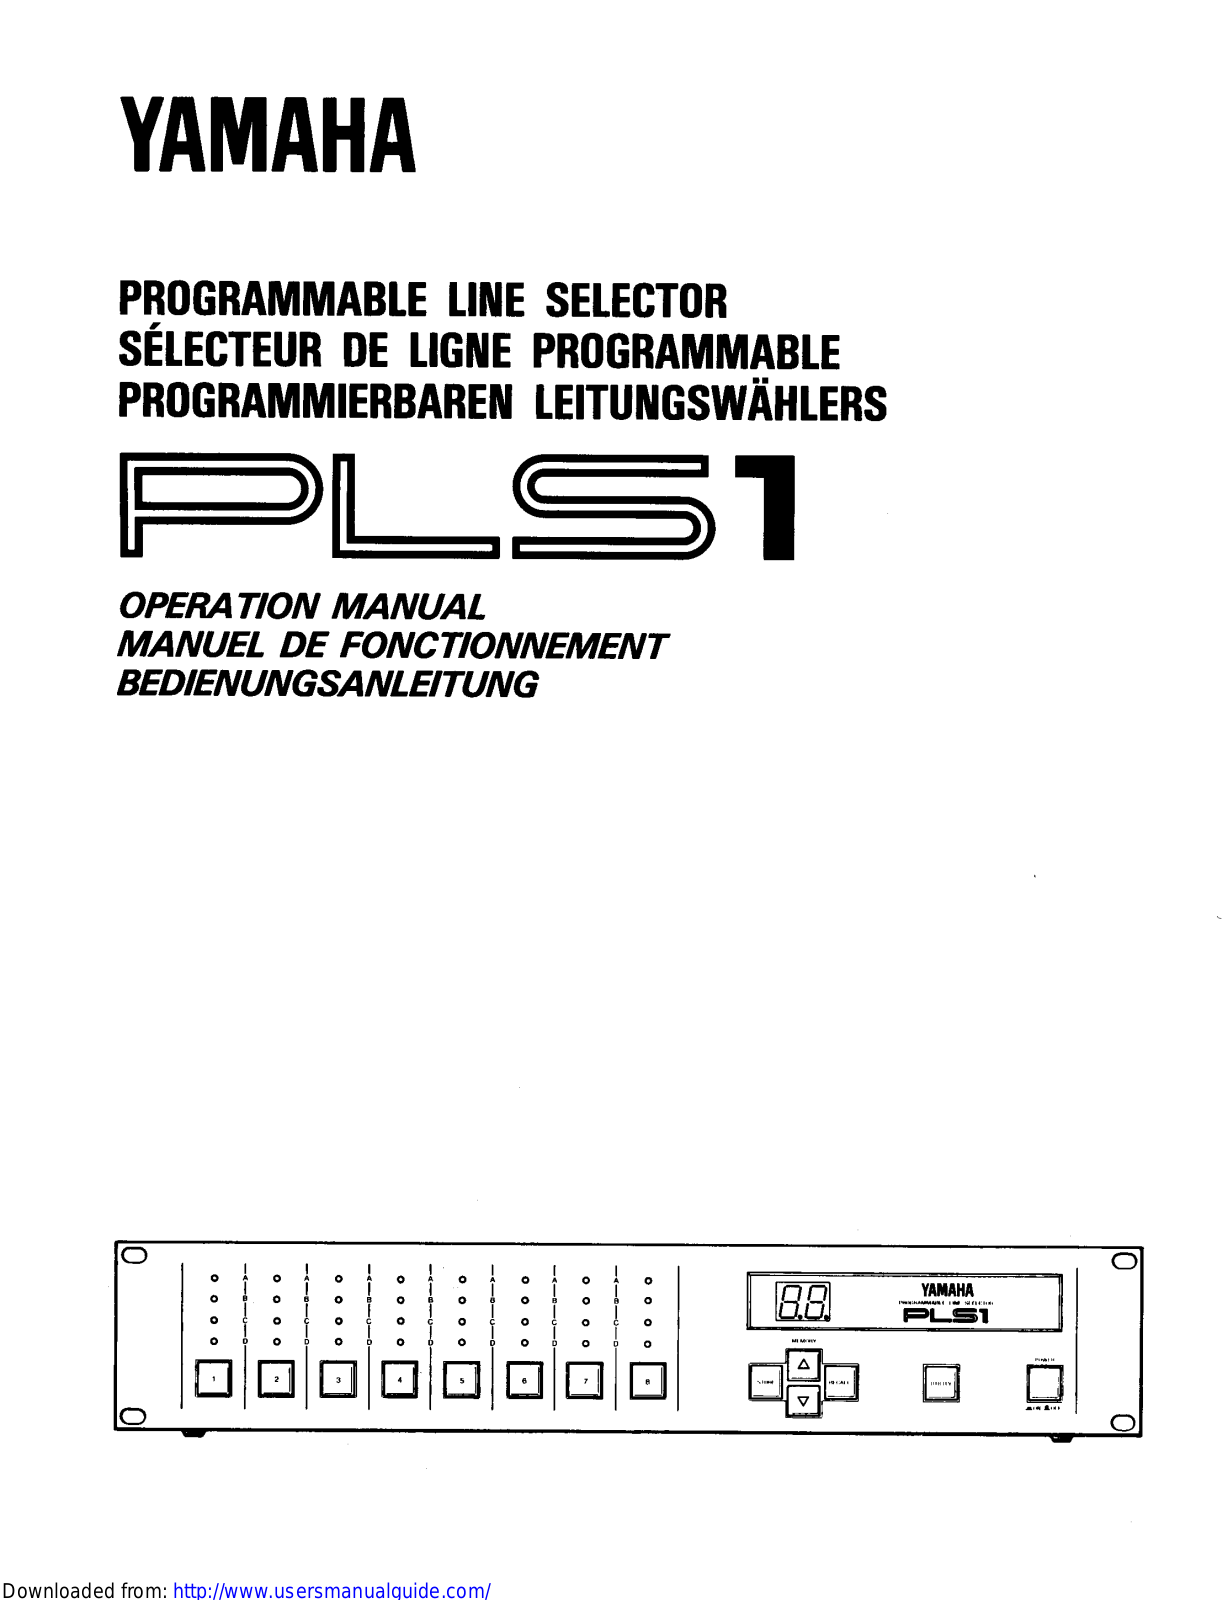 Yamaha Audio PLS1 User Manual